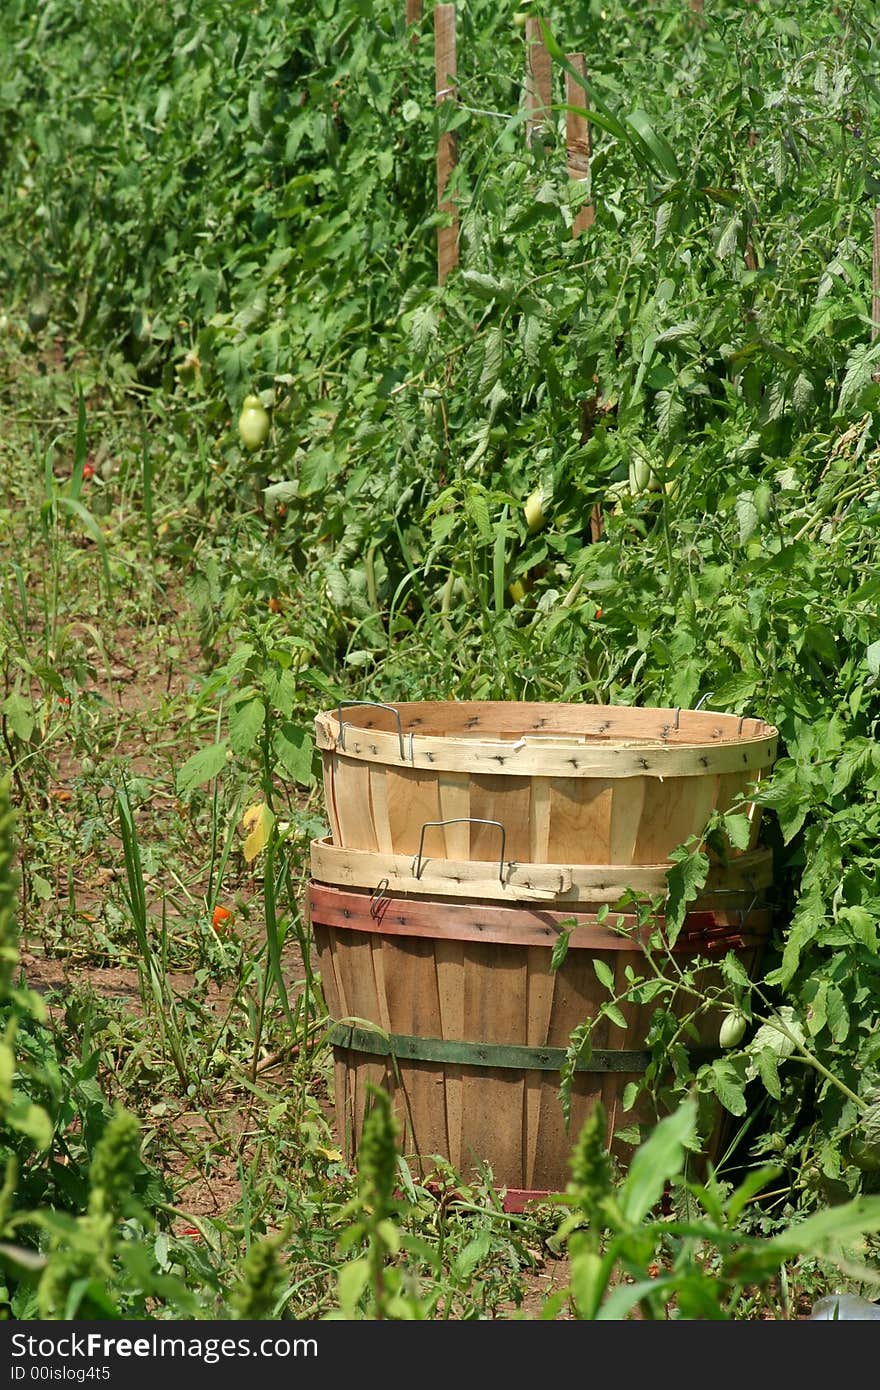 Tomatoe basket in a row of tomatoes. Tomatoe basket in a row of tomatoes